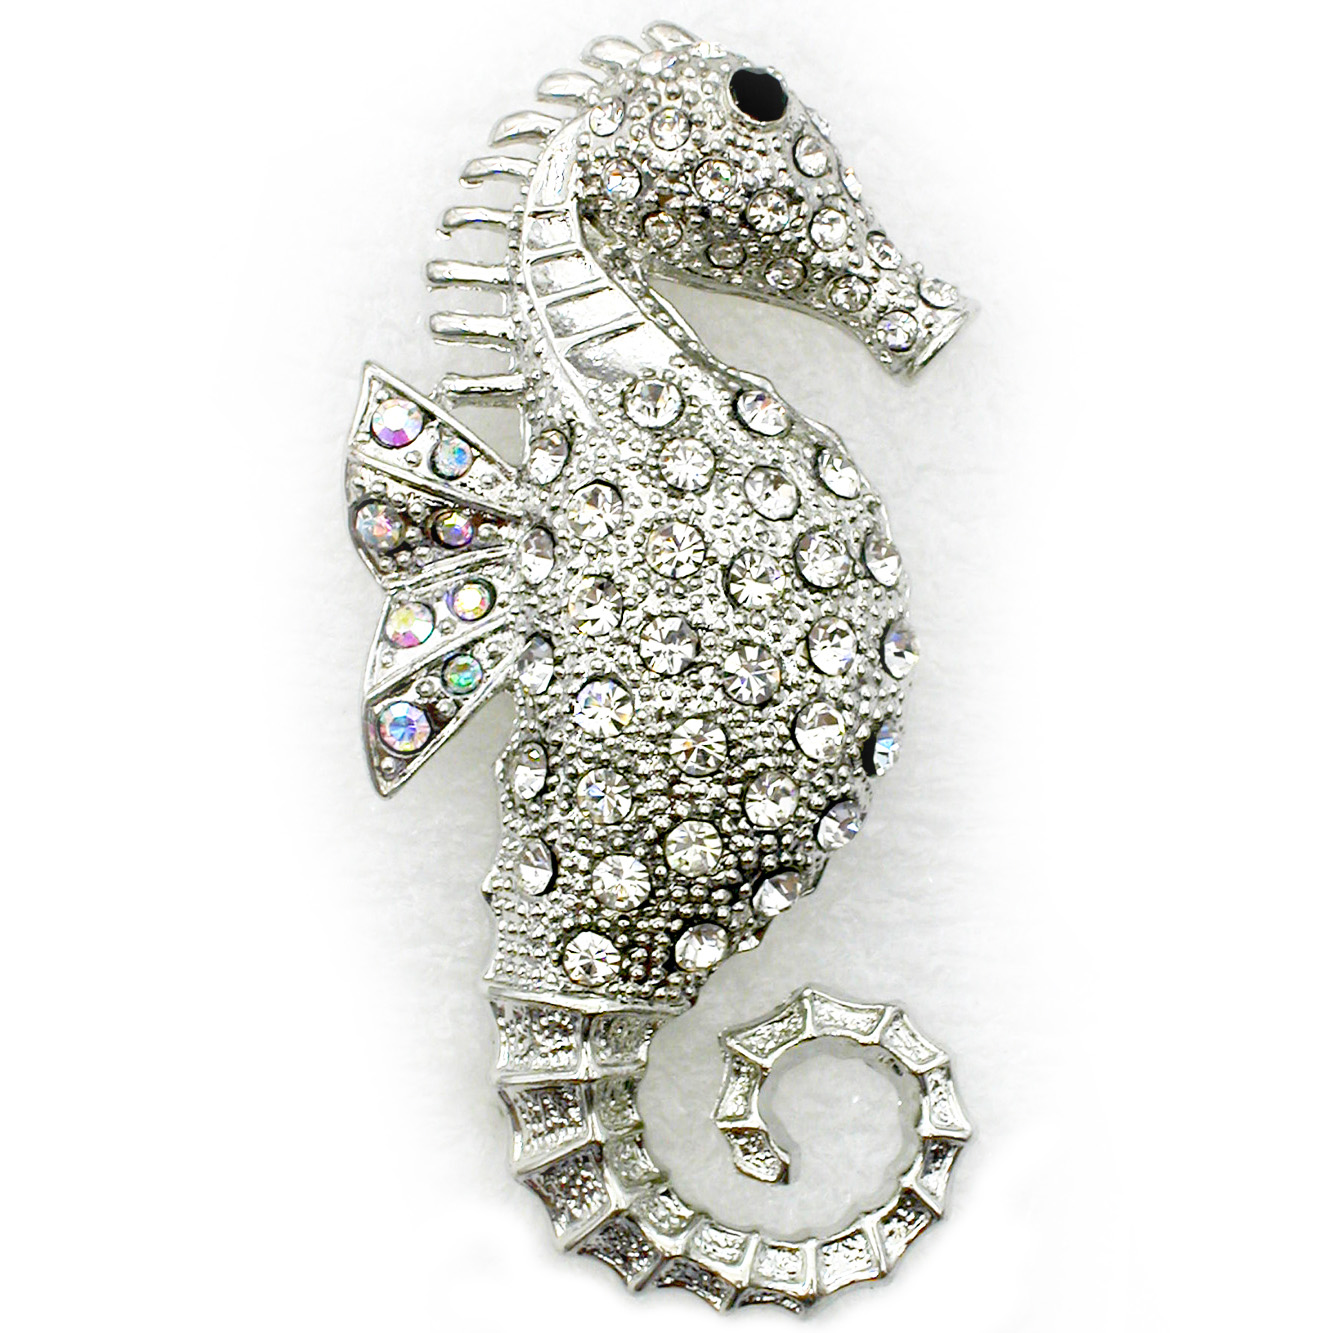 Seahorse brooch rhinestone crystal  vintage style animal diamante in gift box